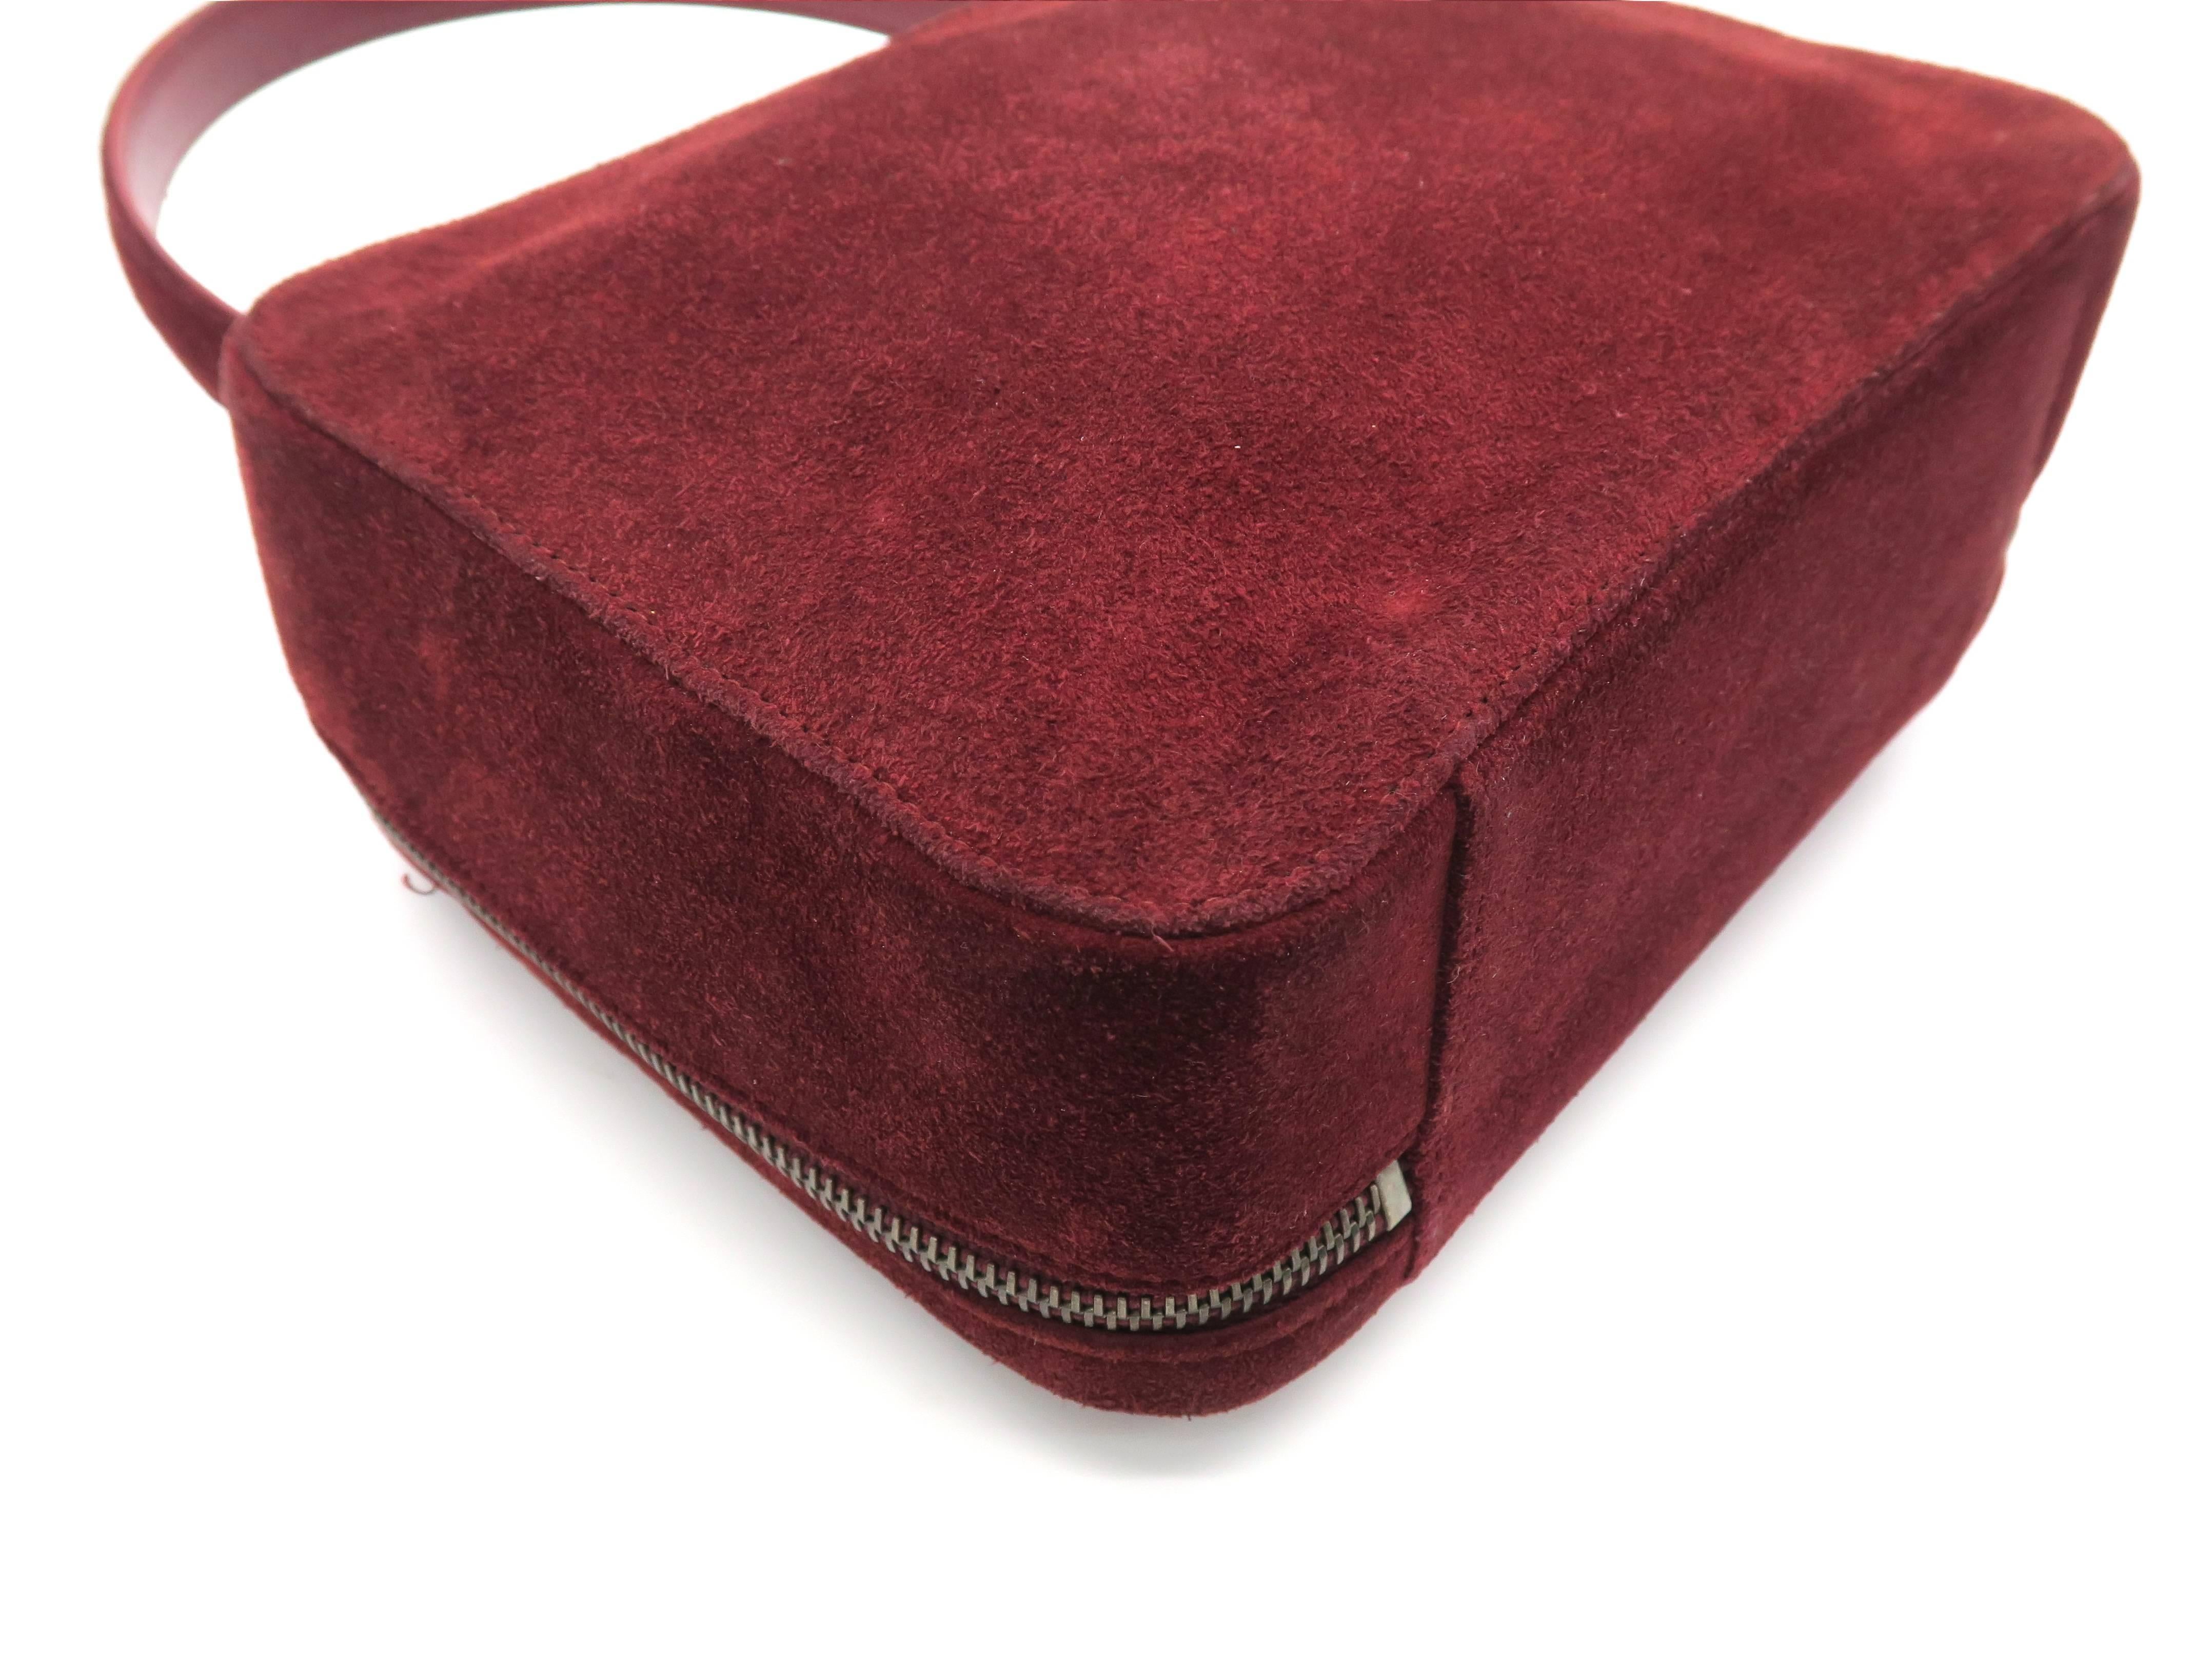 Chanel Red Suede Handbag For Sale 5